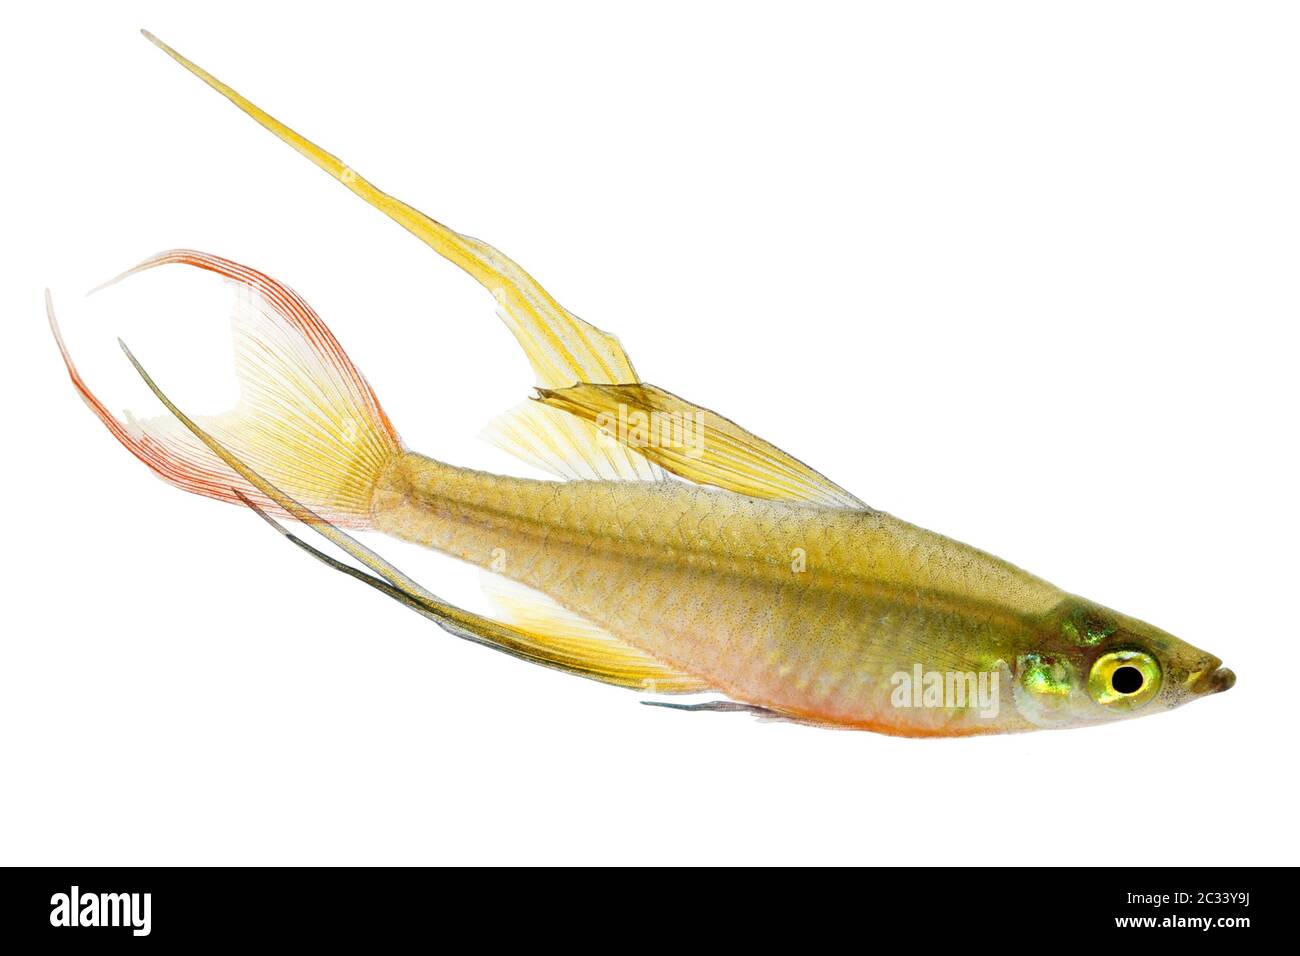 Threadfin rainbowfish Iriatherina werneri featherfin rainbowfish tropical aquarium fish Stock Photo